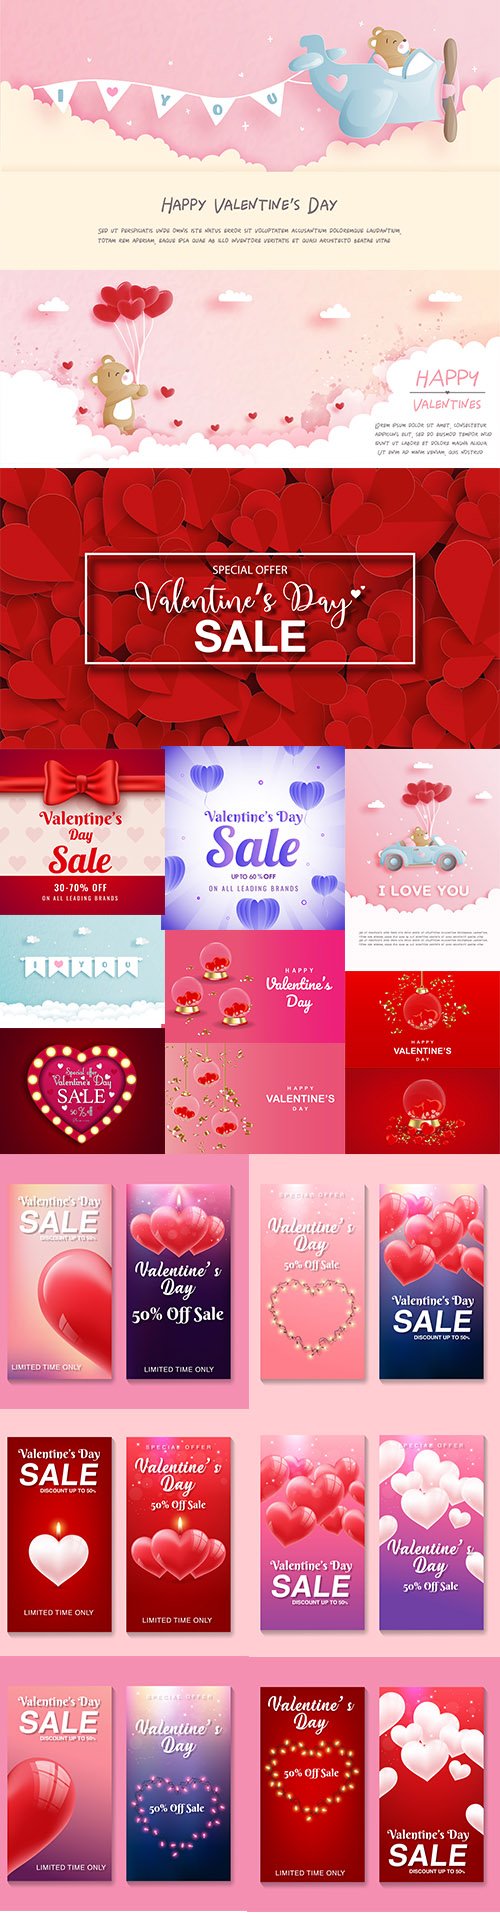 Set of Romantic Valentines Day Illustrations Vol 15